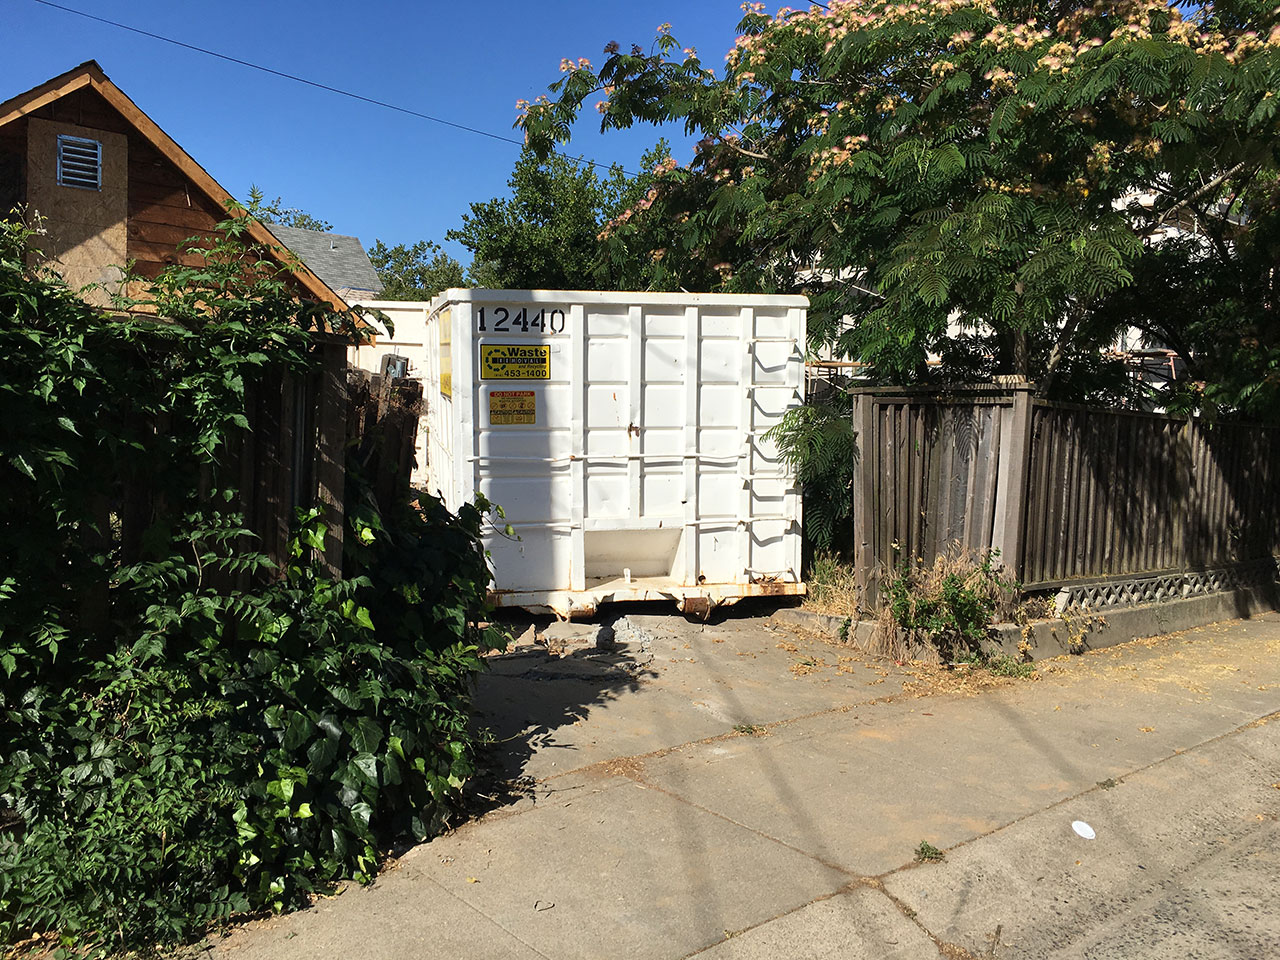 40 Yard Dumpster East Sacramento